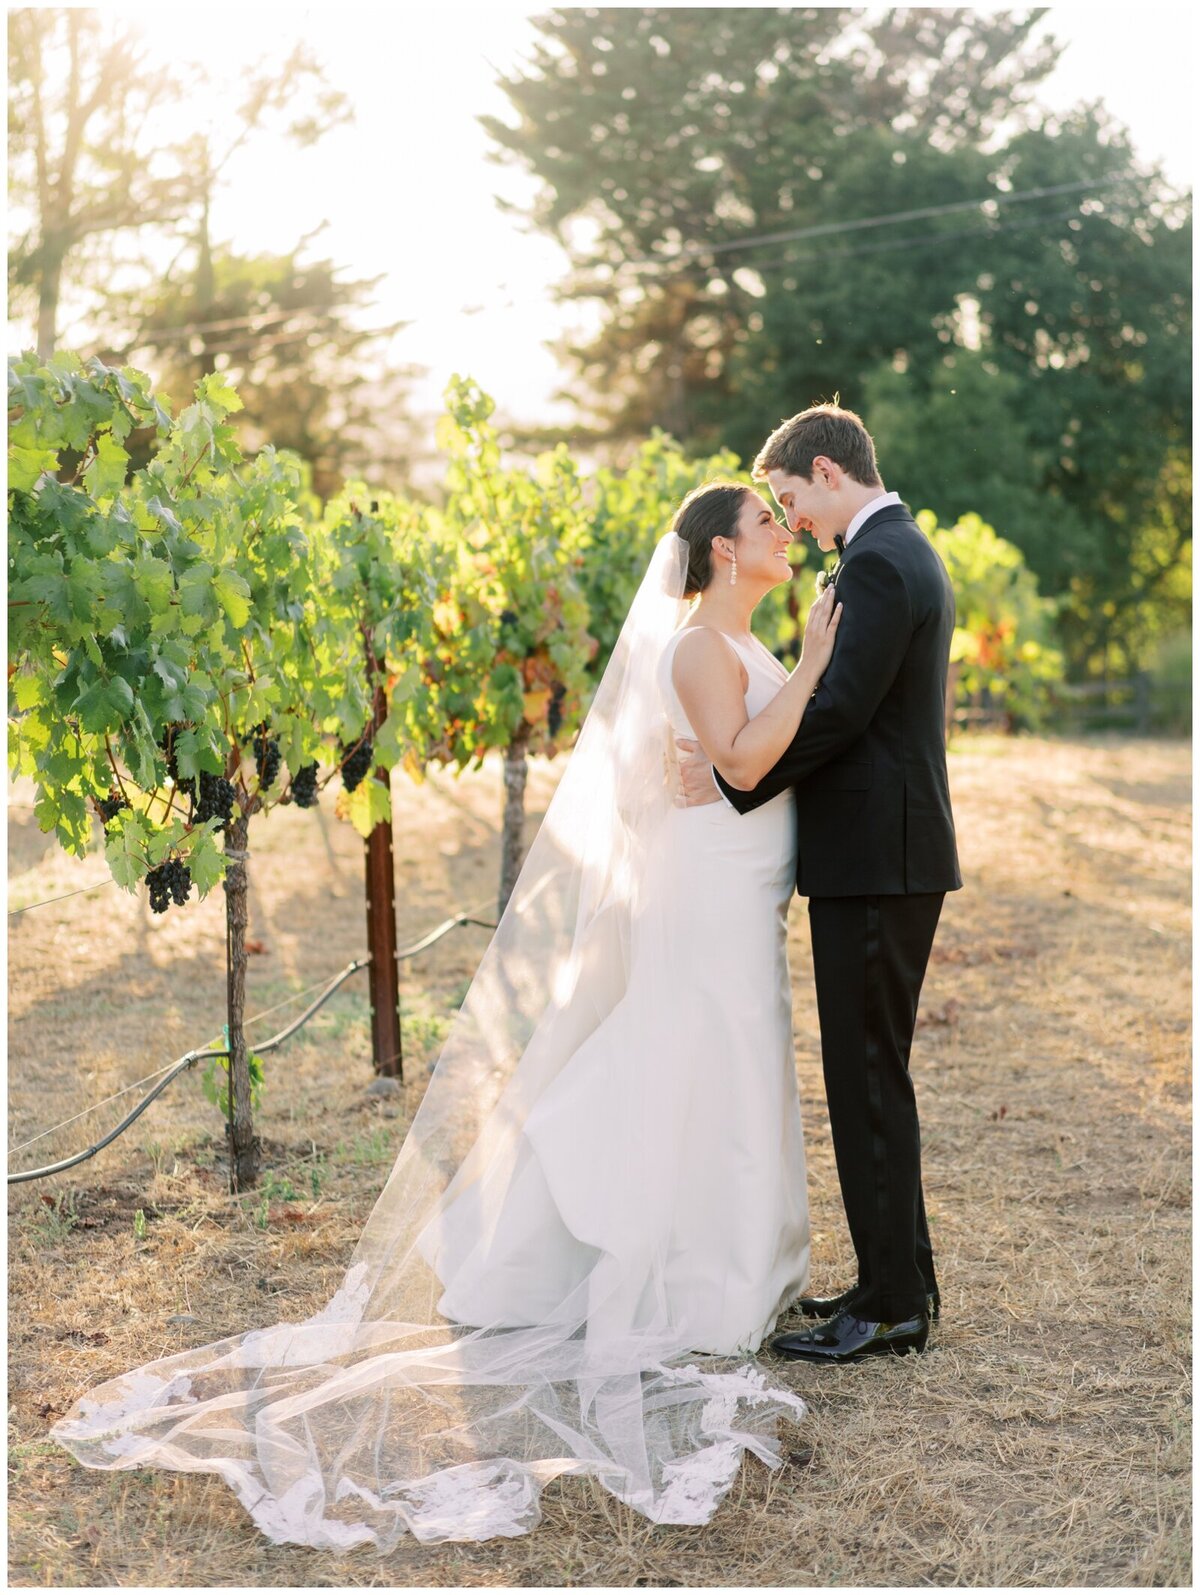 Kelsey-Alex-Sonoma-Buena-Vista-Winery-Wedding-Cassie-Valente-Photography-0162